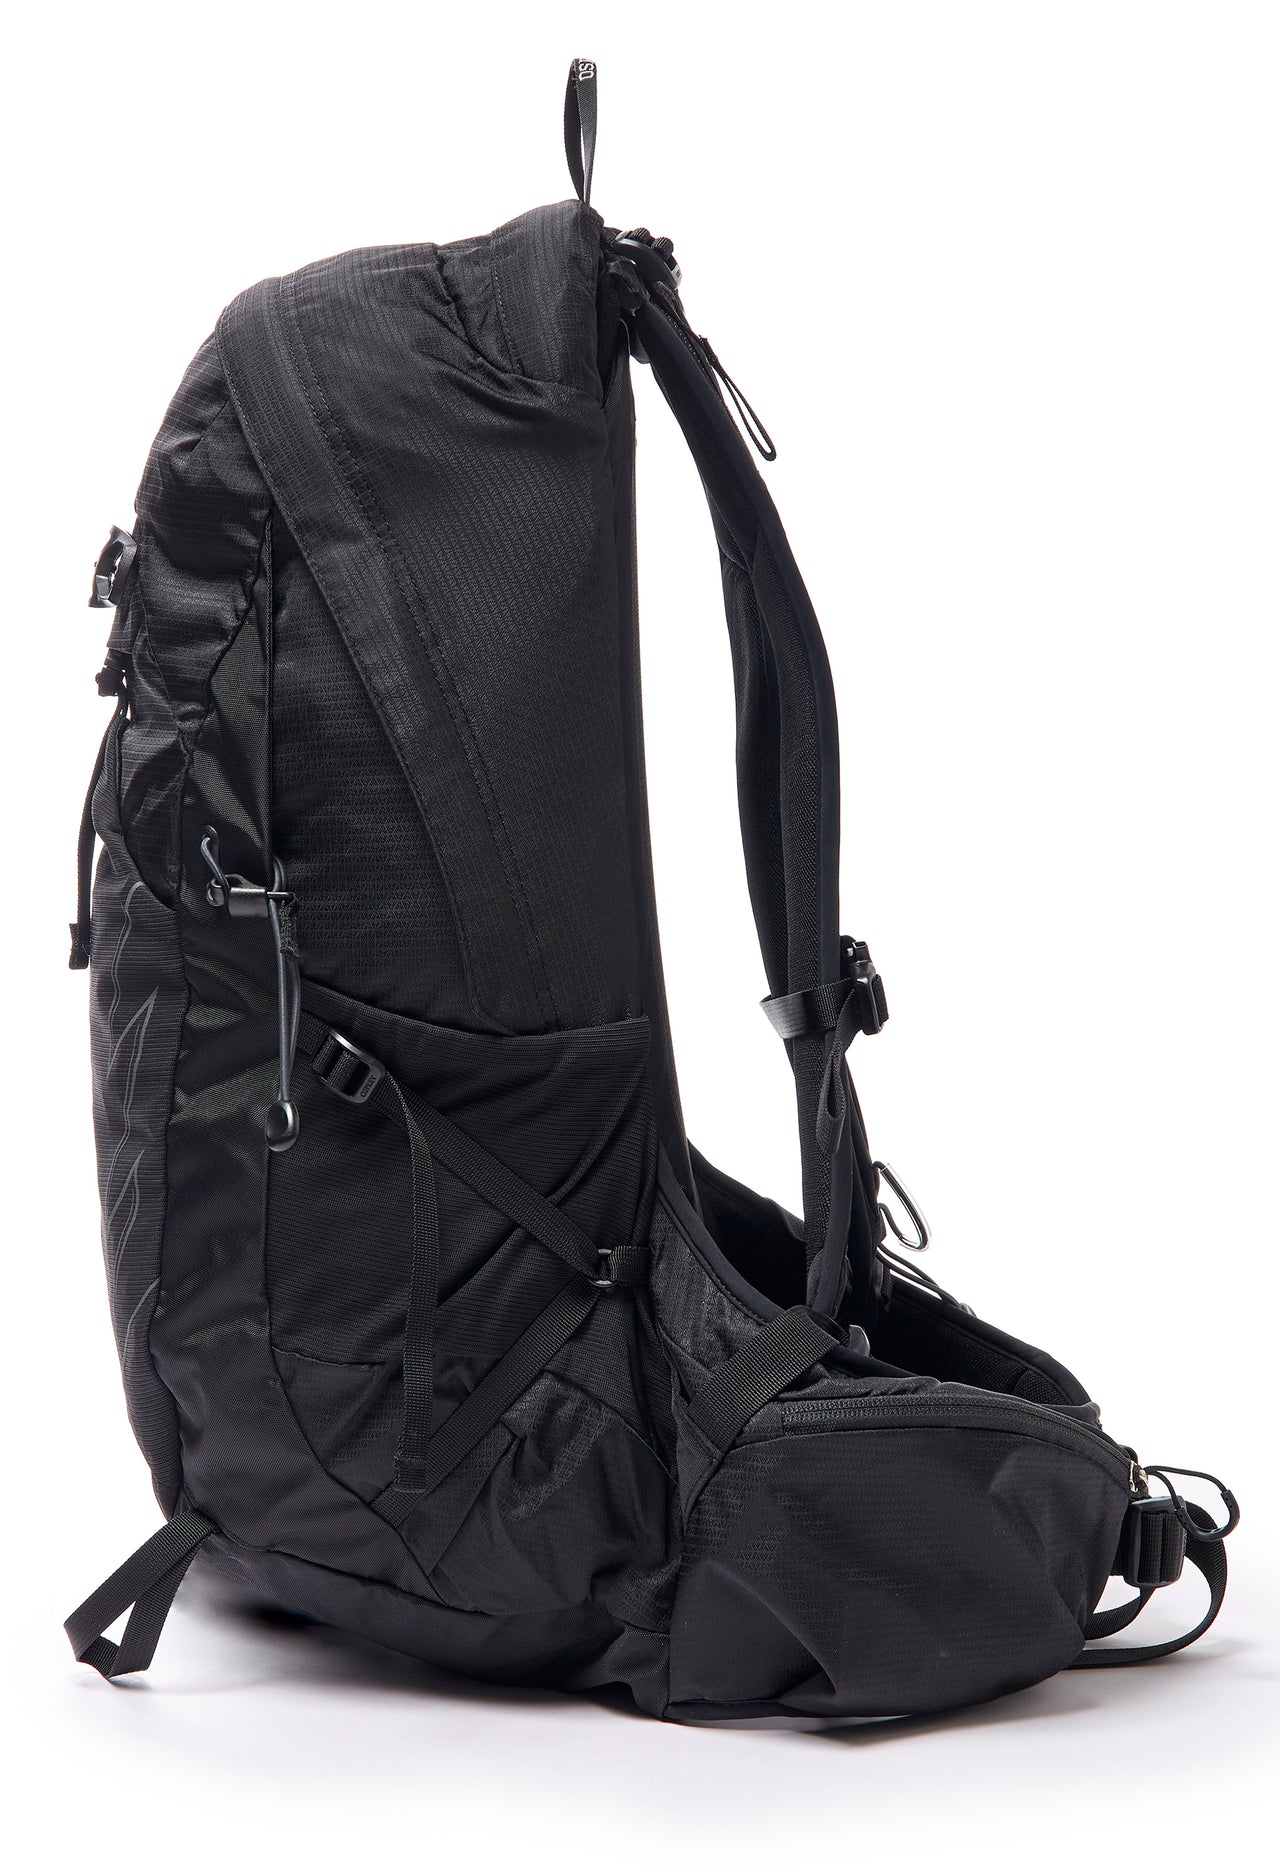 Osprey Talon 22 Backpack - Stealth Black